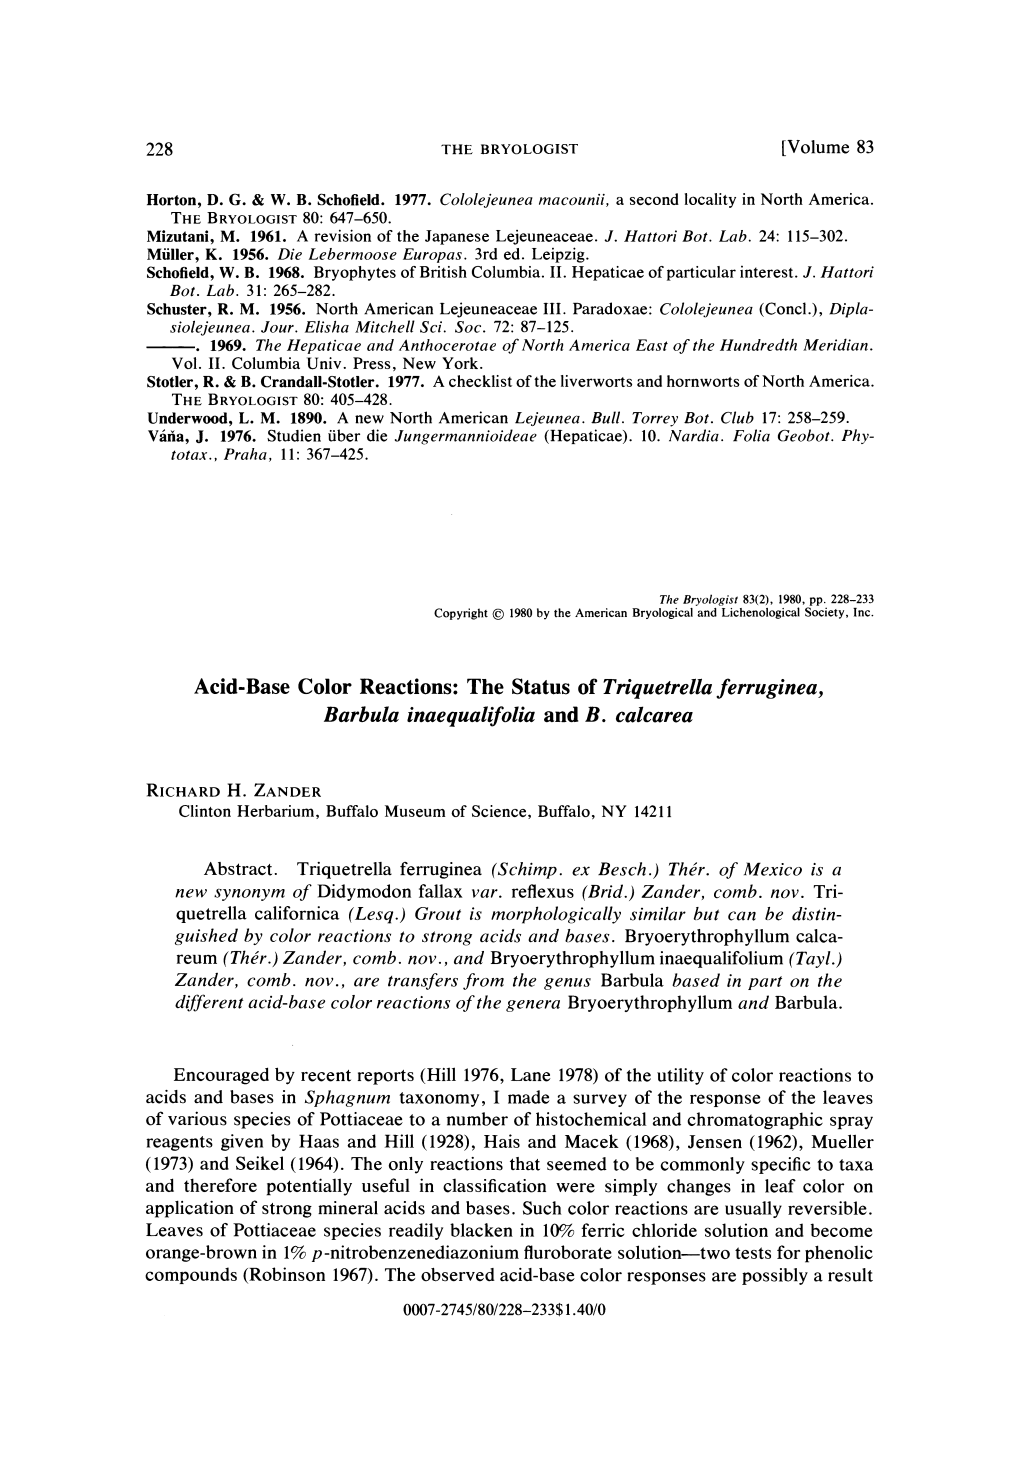 Acid-Base Color Reactions: the Status of Triquetrella Ferruginea